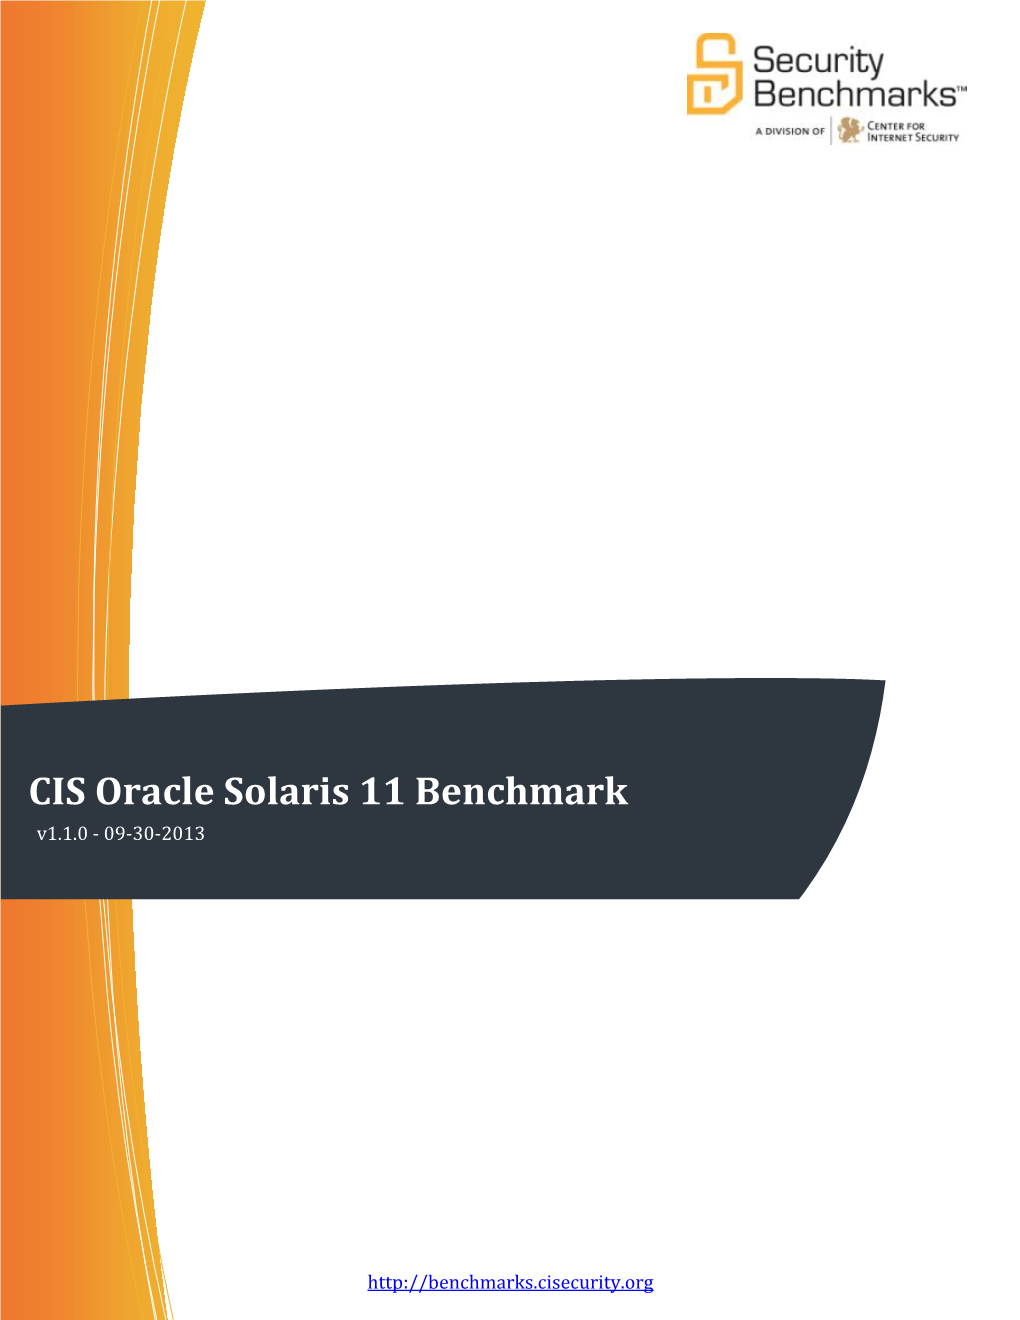 CIS Oracle Solaris 11 Benchmark V1.1.0 - 09-30-2013